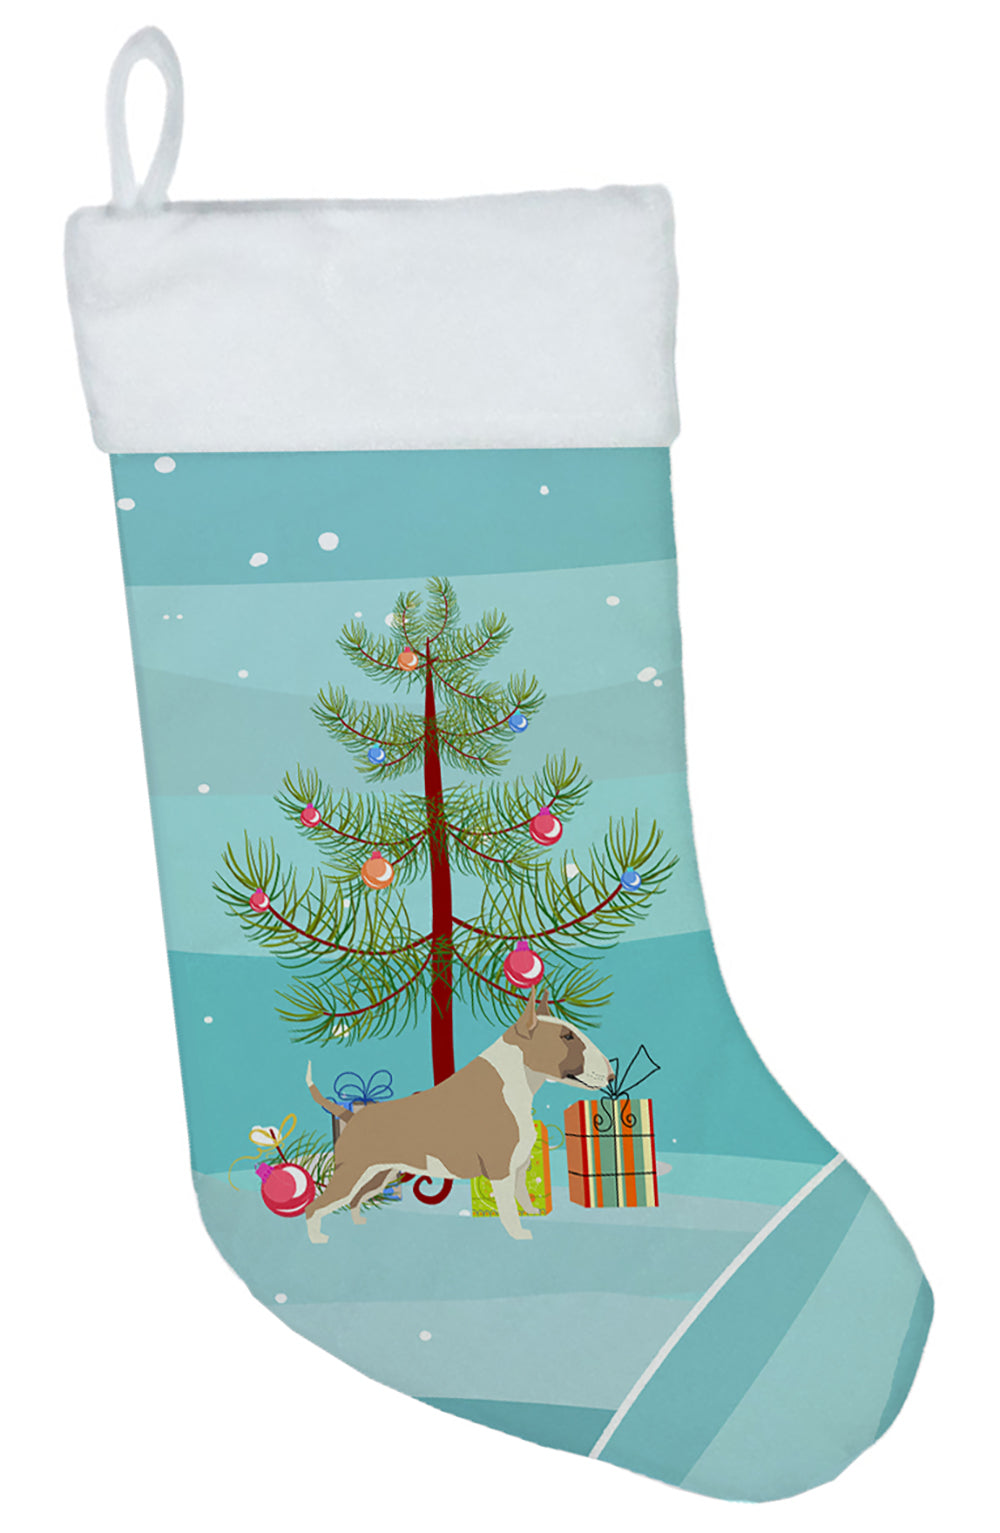 Fawn and White Bull Terrier Christmas Tree Christmas Stocking CK3528CS